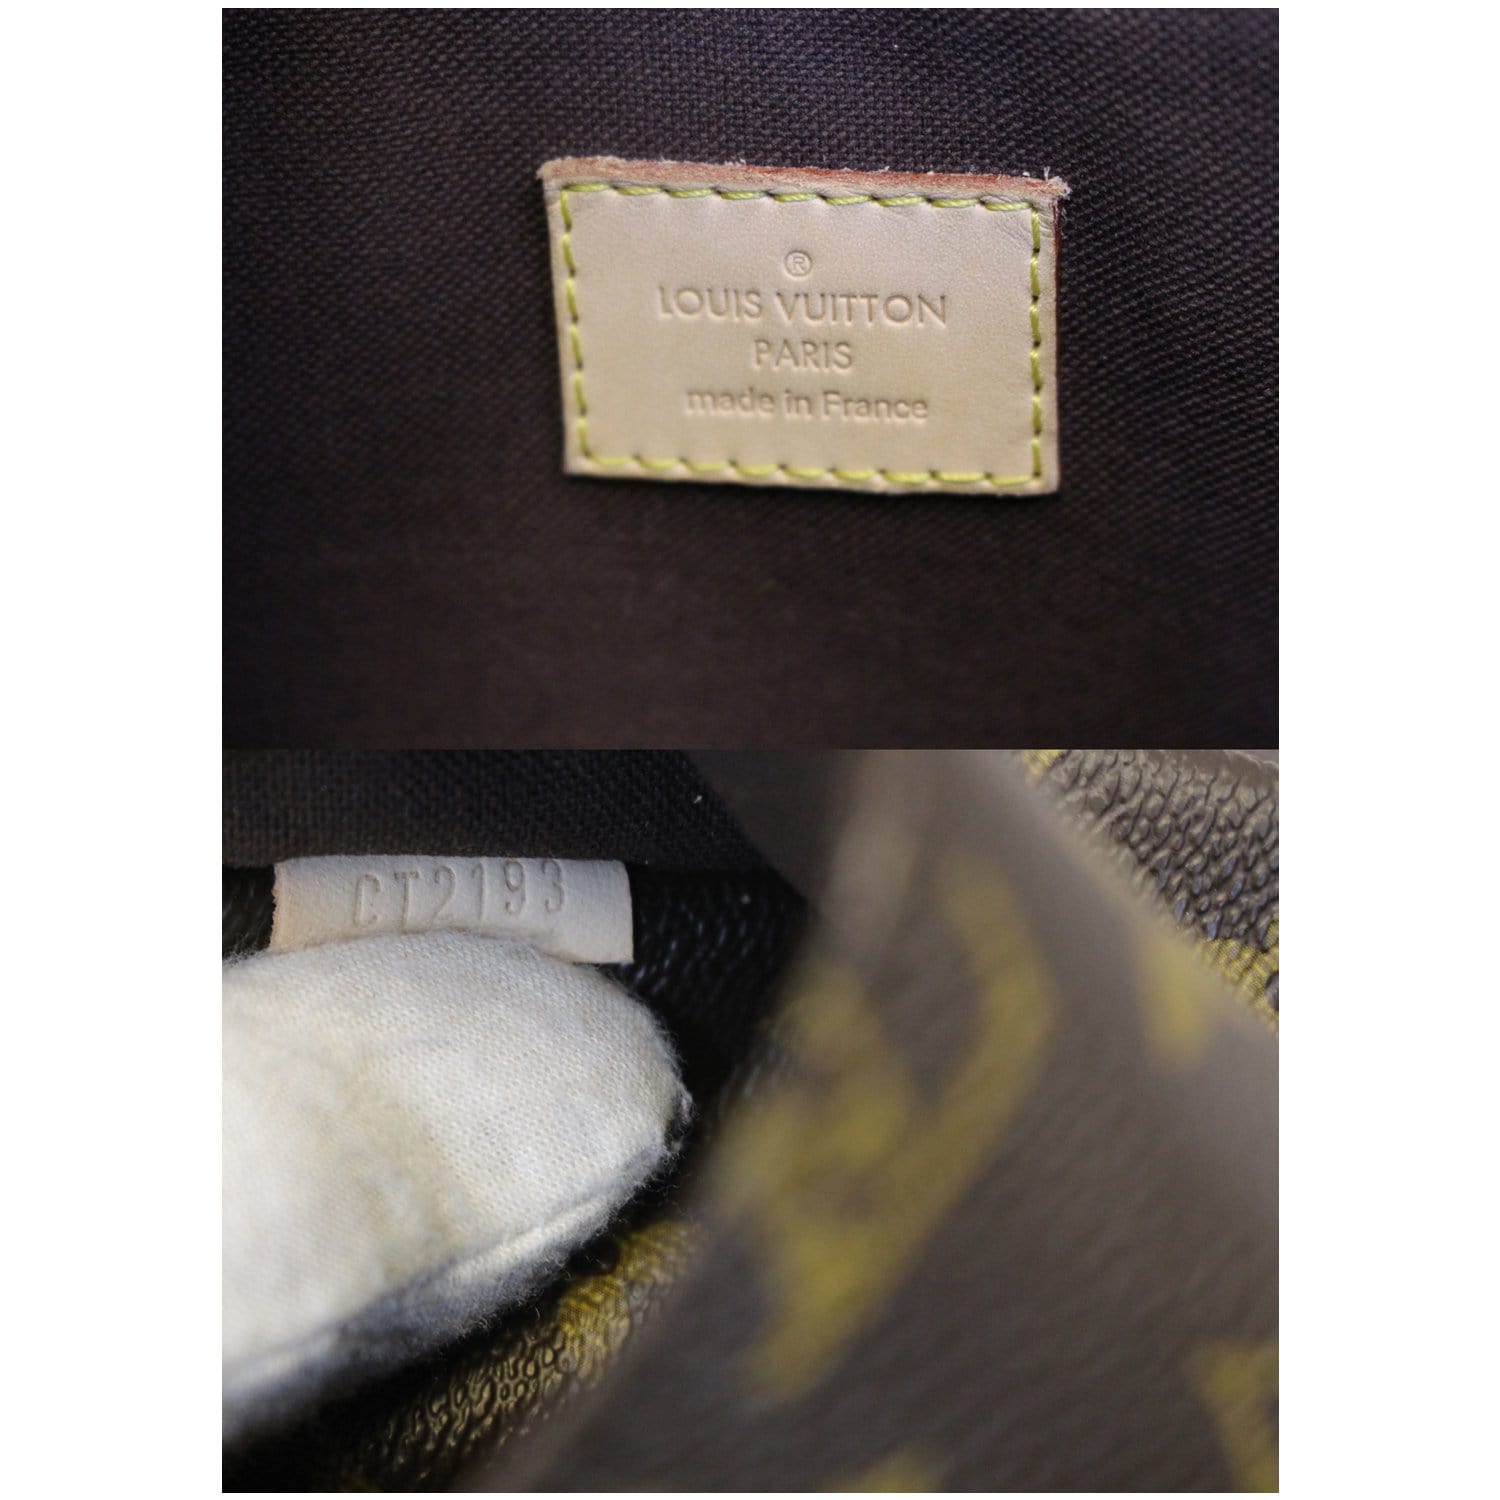 Louis Vuitton 2013 Menilmontant Pm Shoulder Bag in Brown